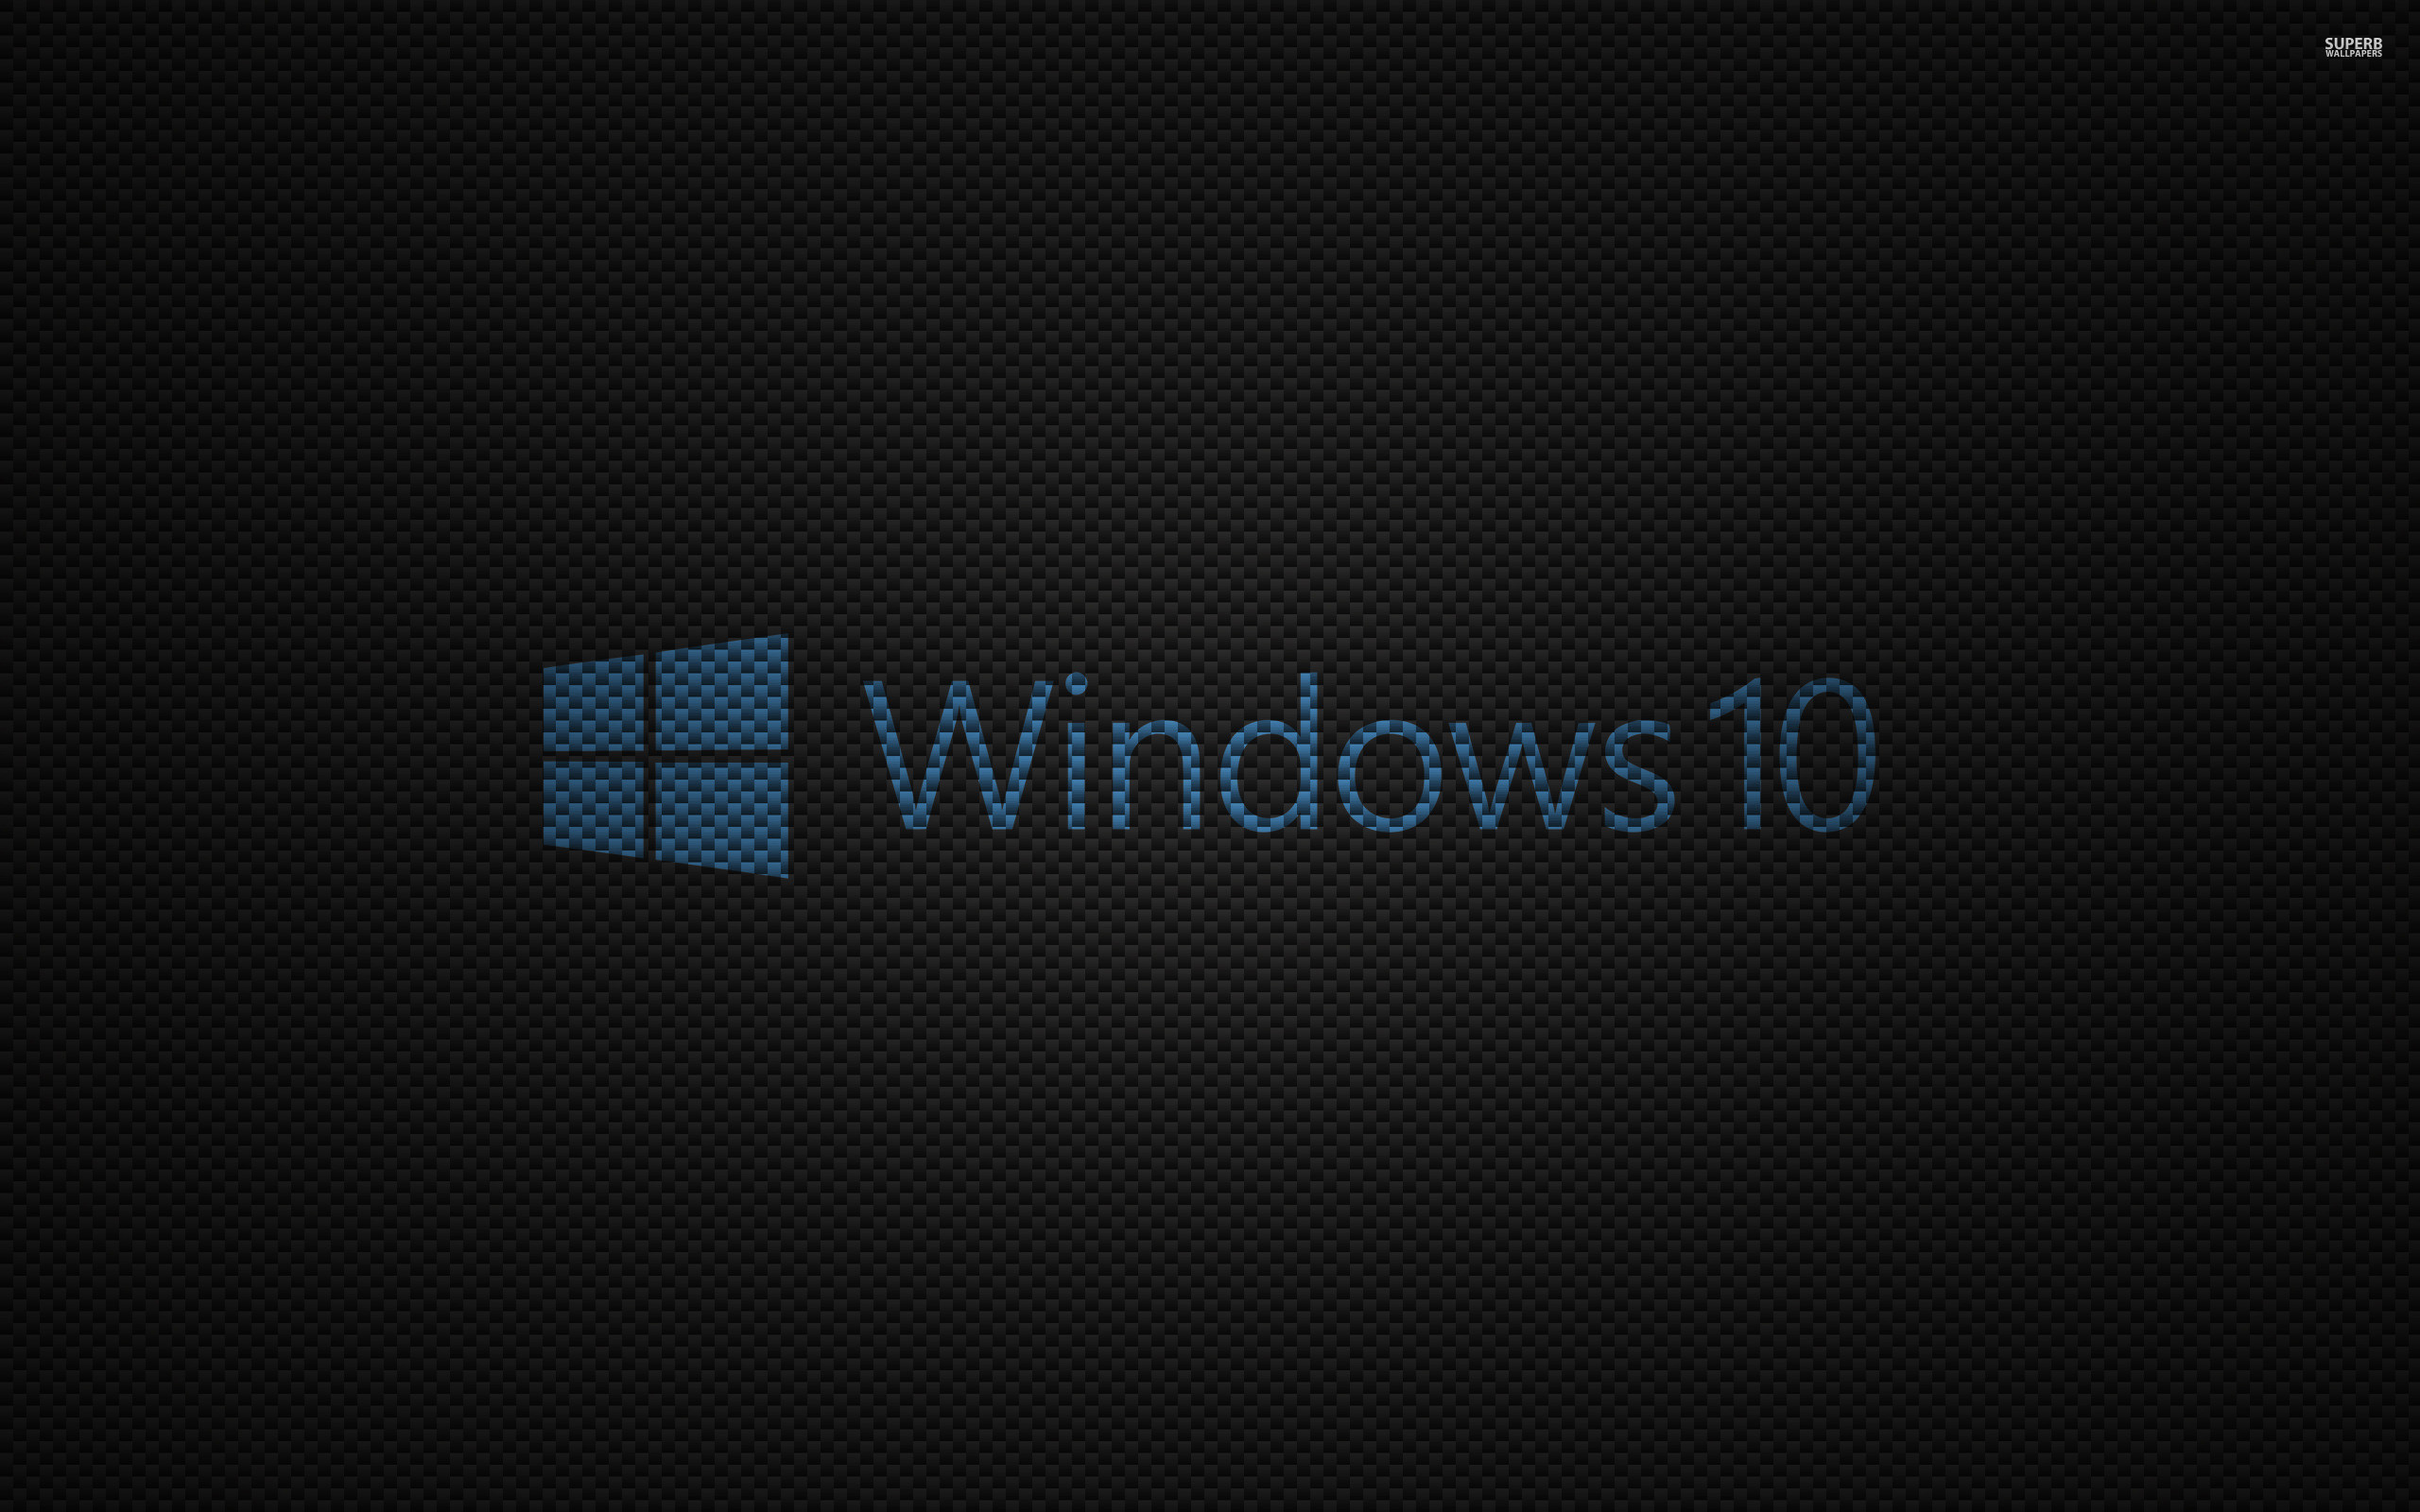 2560x1600 Windows 10 text logo on carbon fiber wallpaper - Computer .